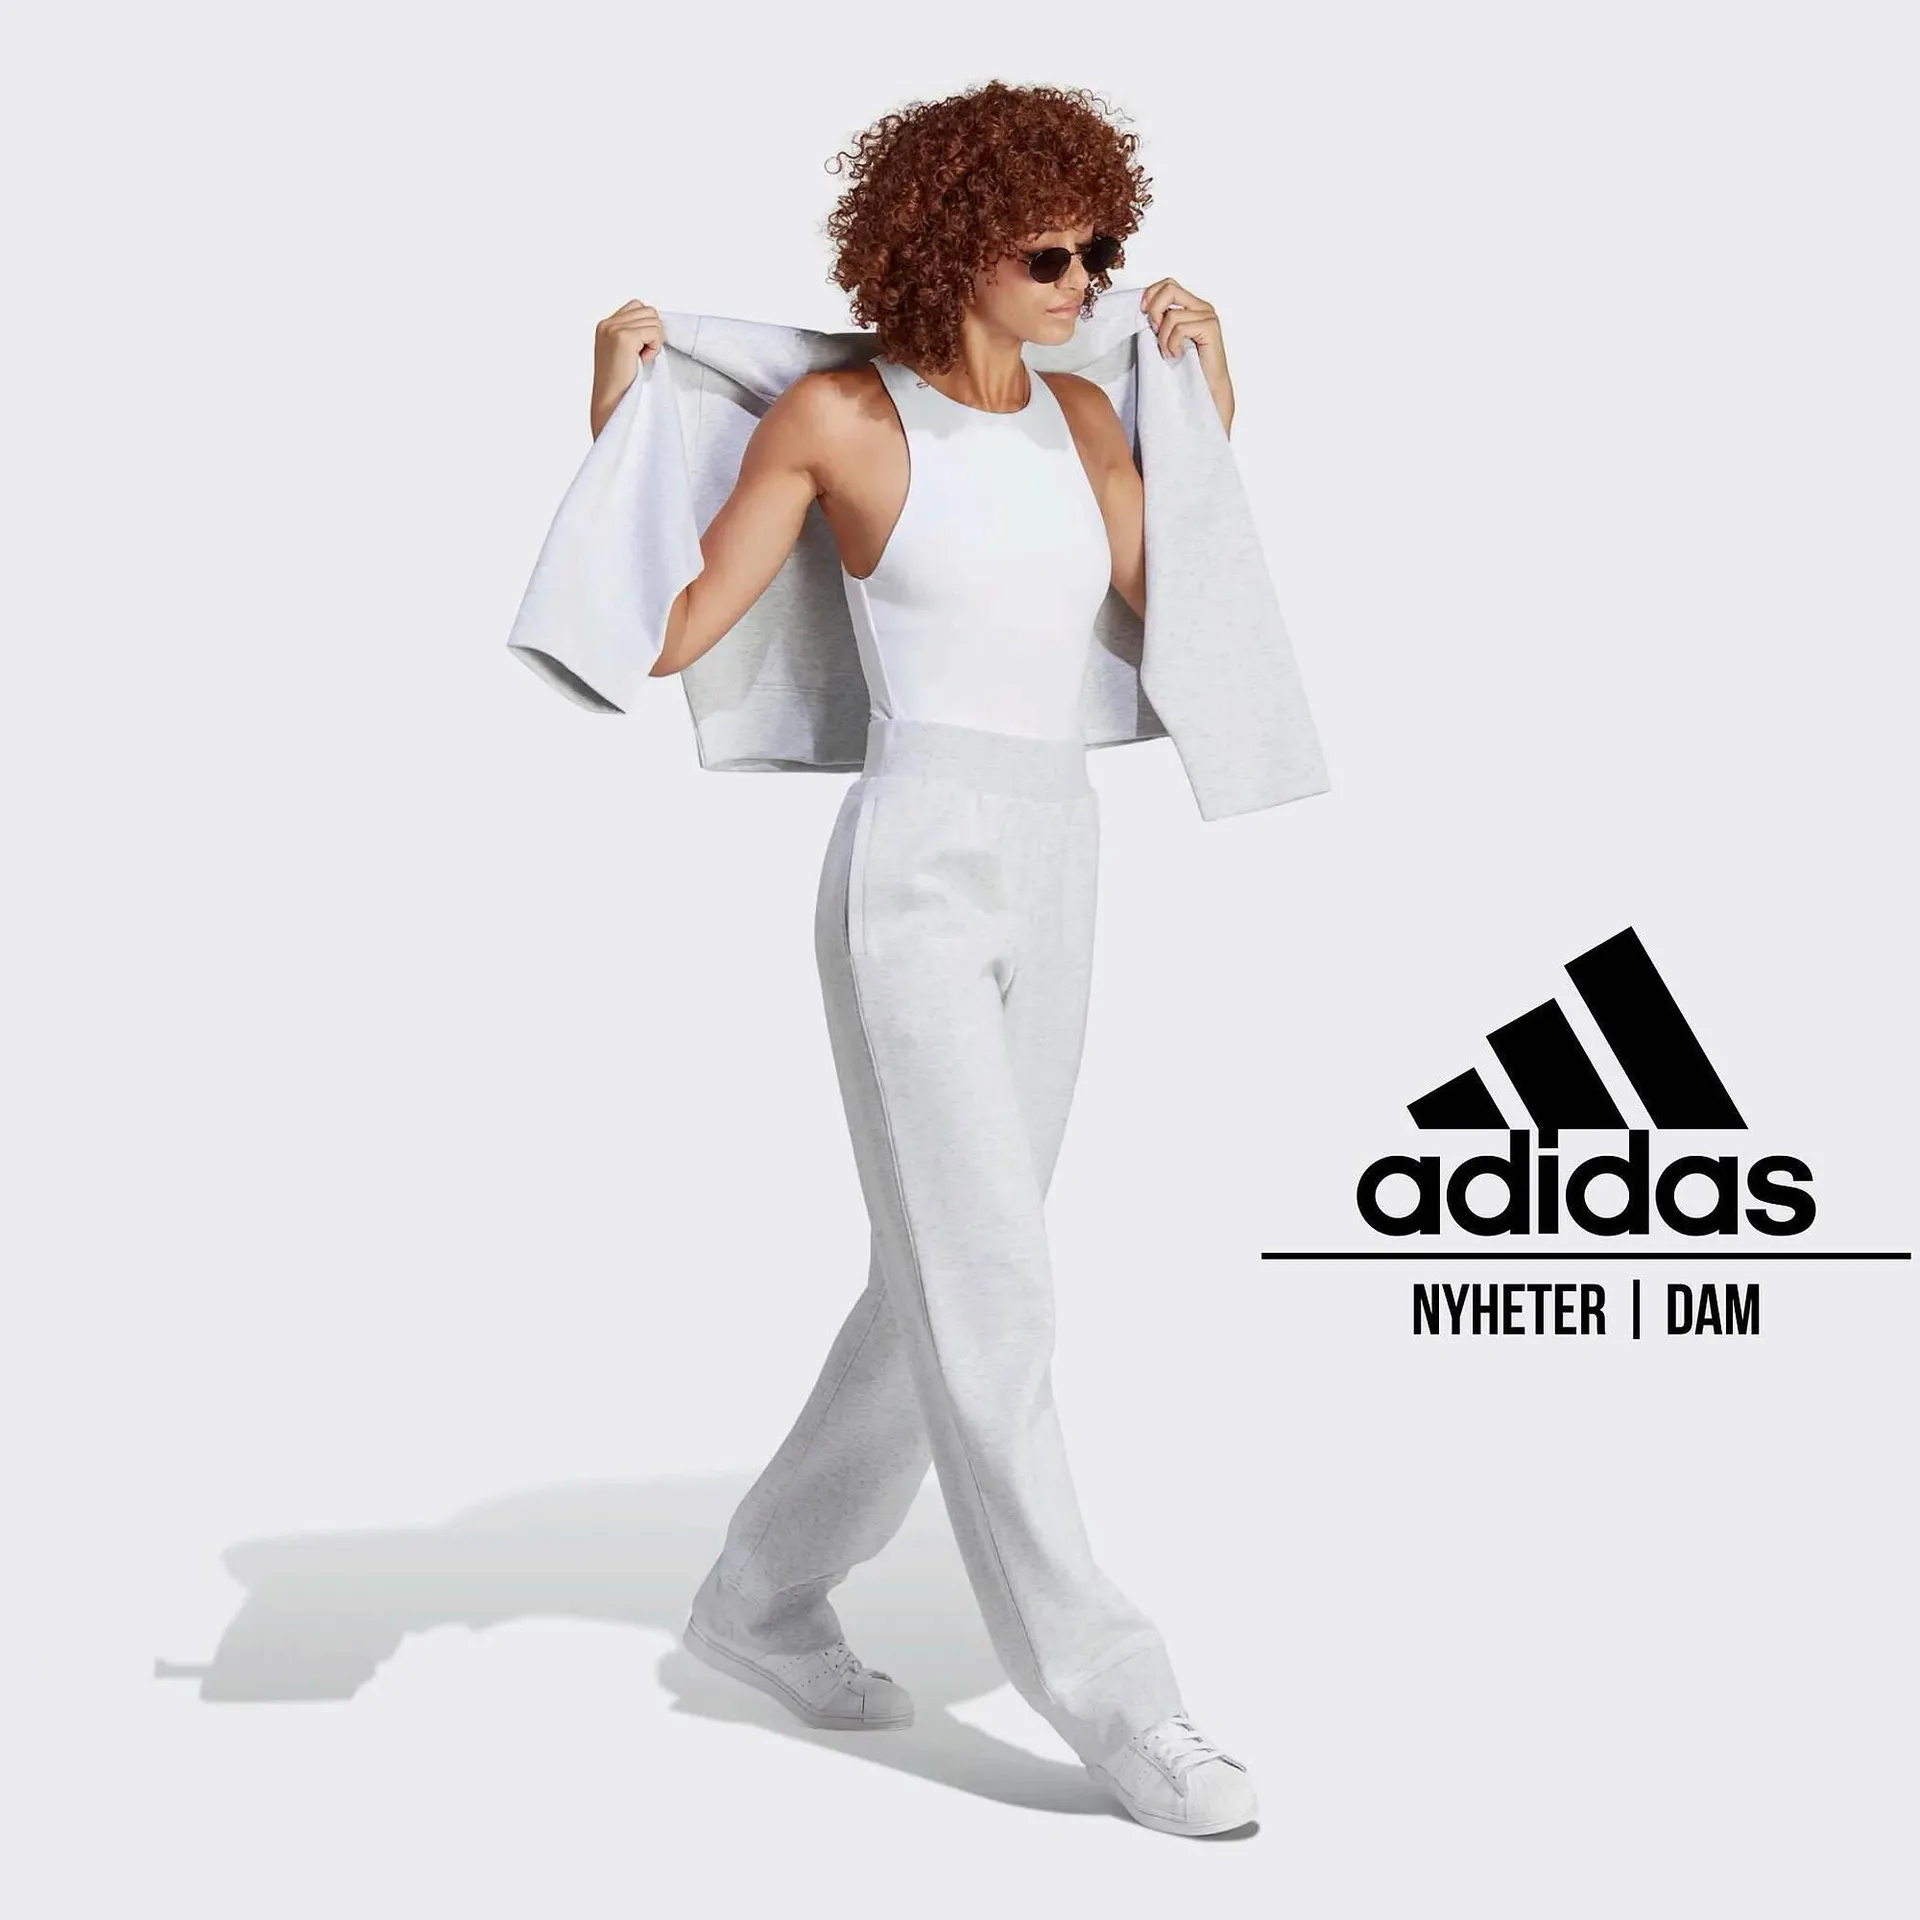 Adidas reklamblad - 1